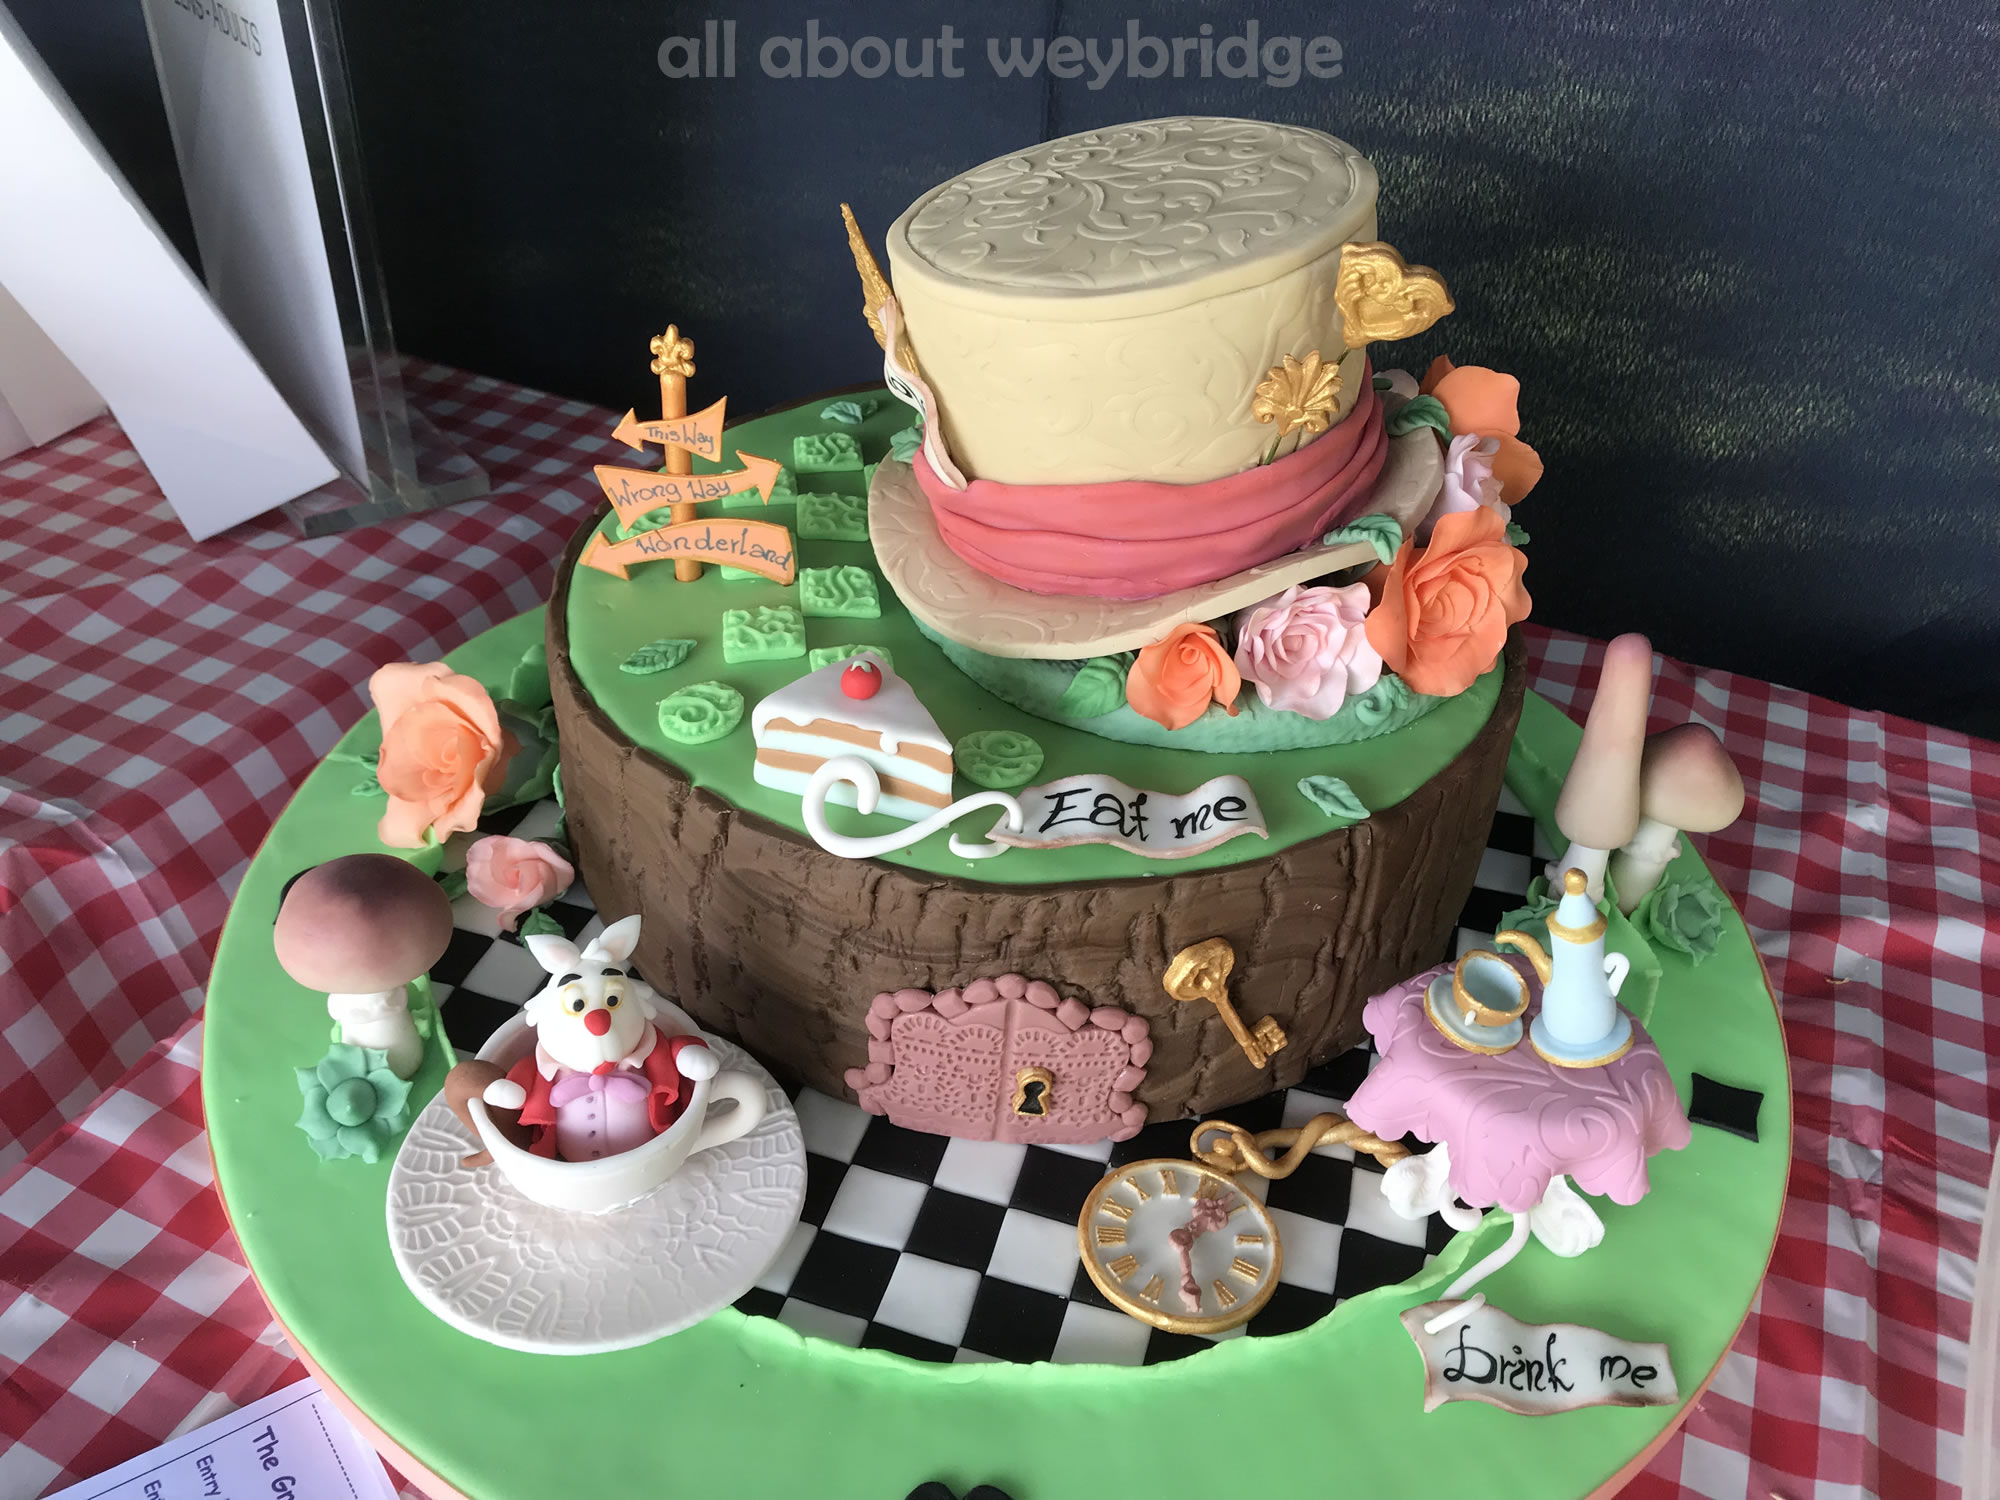 Winning Cake - Mad Hatters Tea Party - Great Weybridge Cake-Off 2018